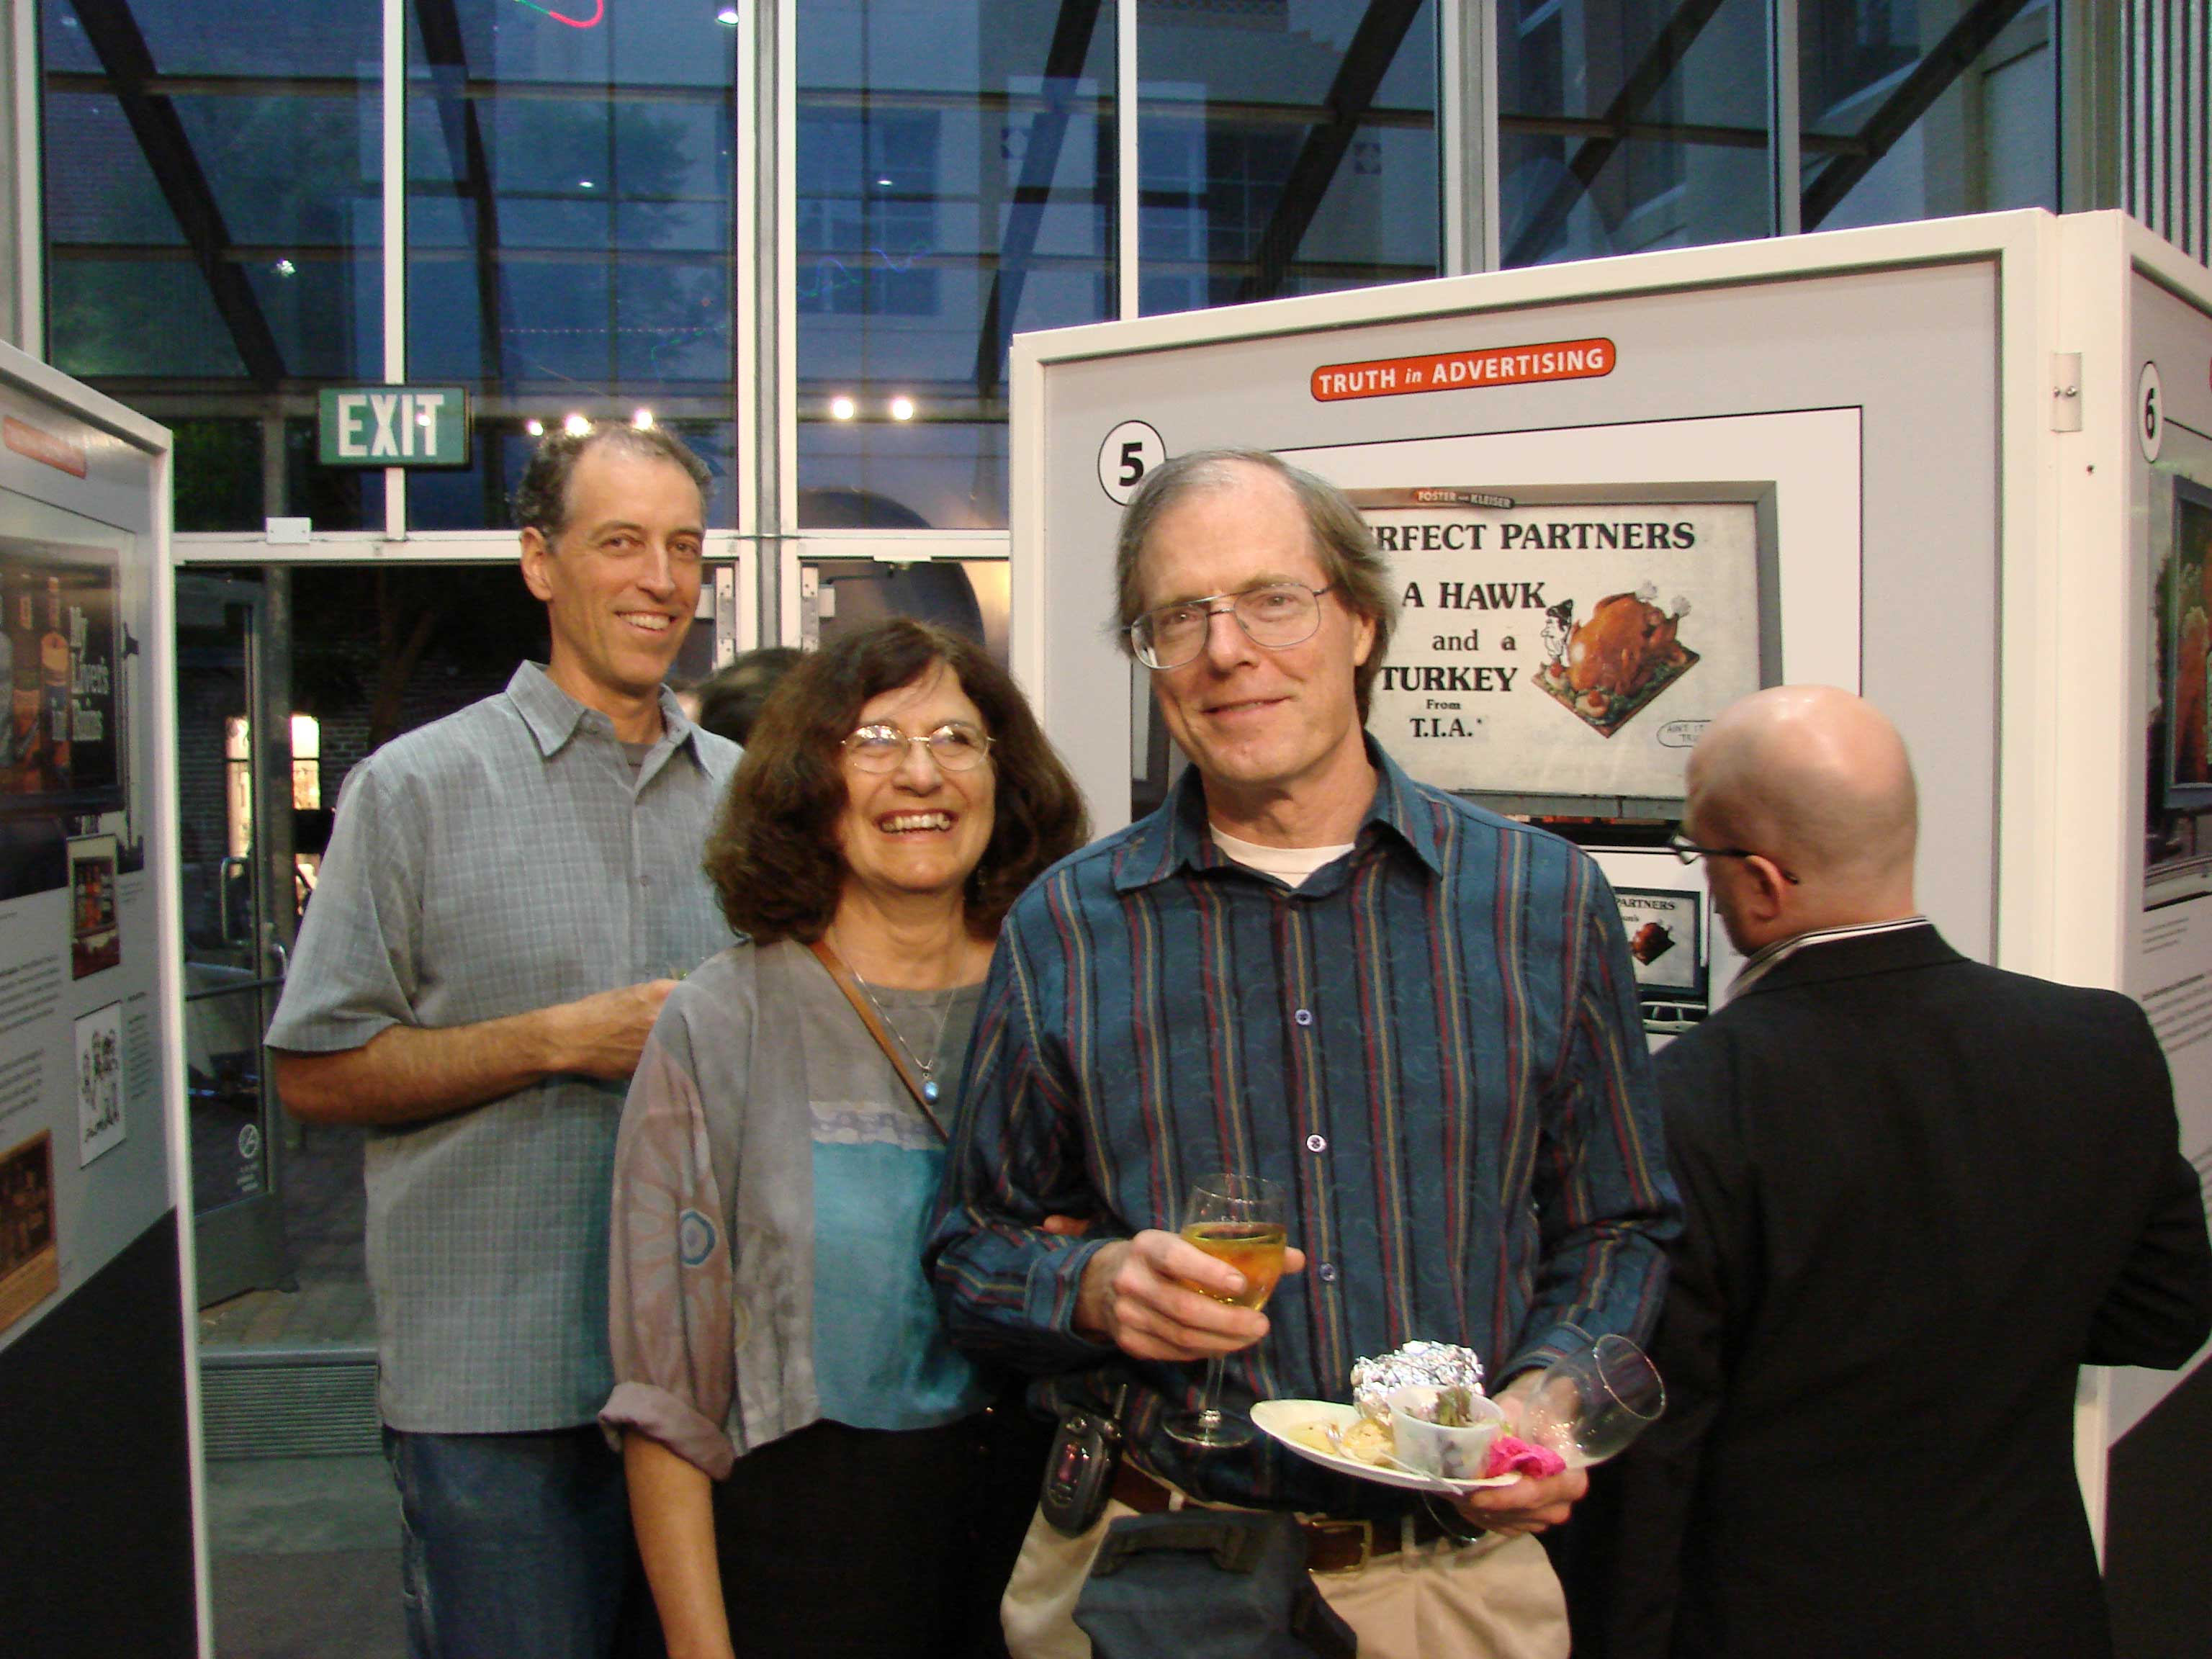 TIA exhibit attendees